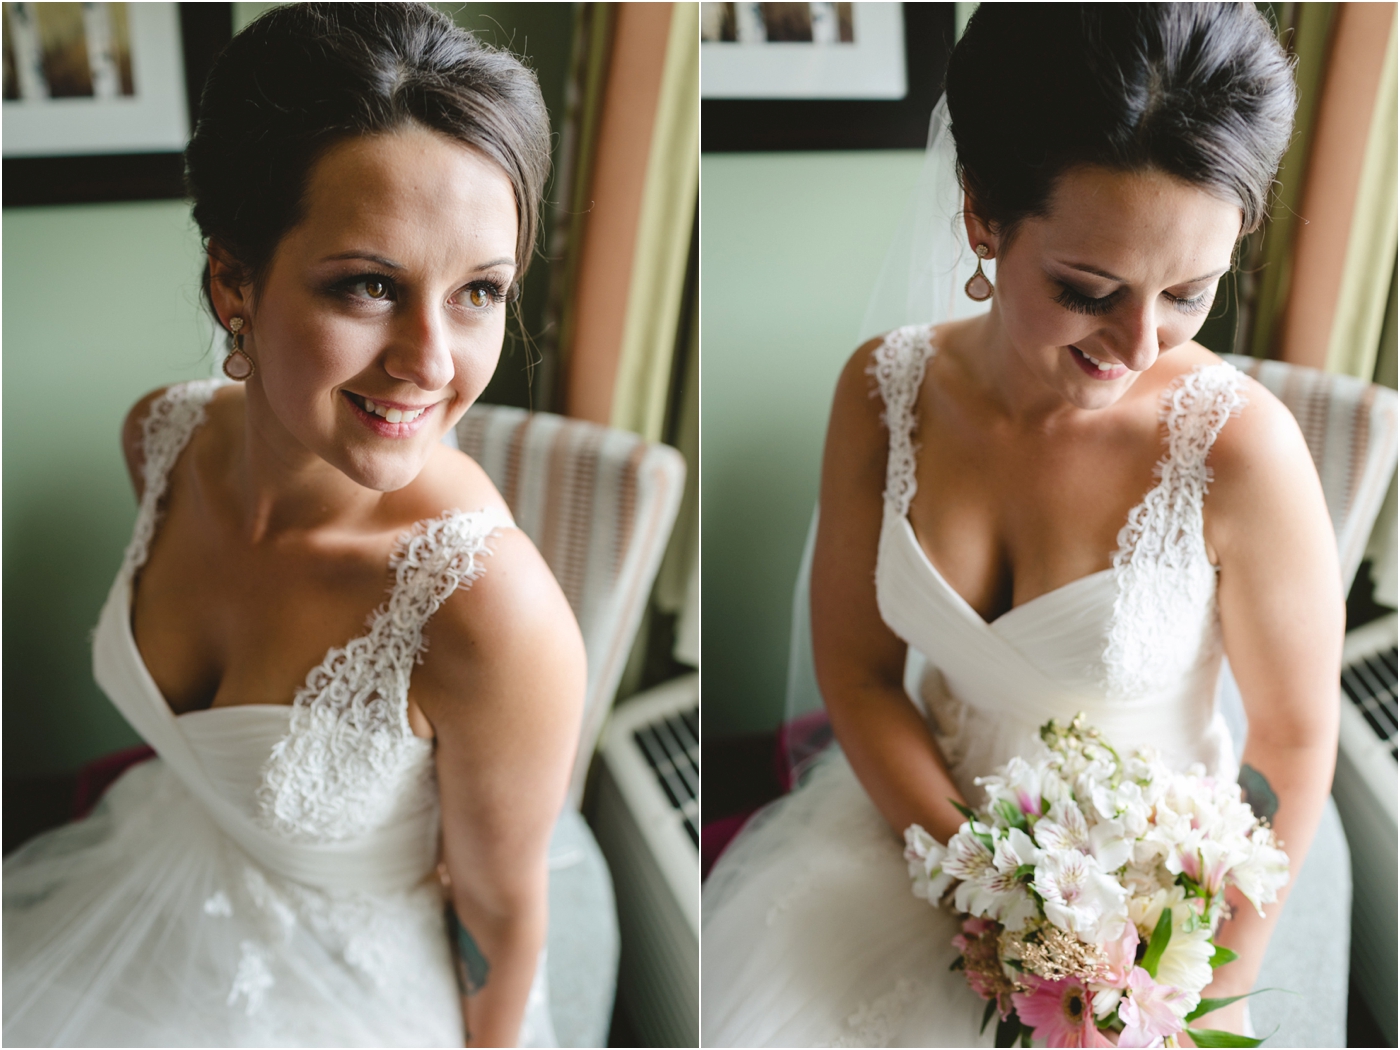 blushing bride illuminated by window light